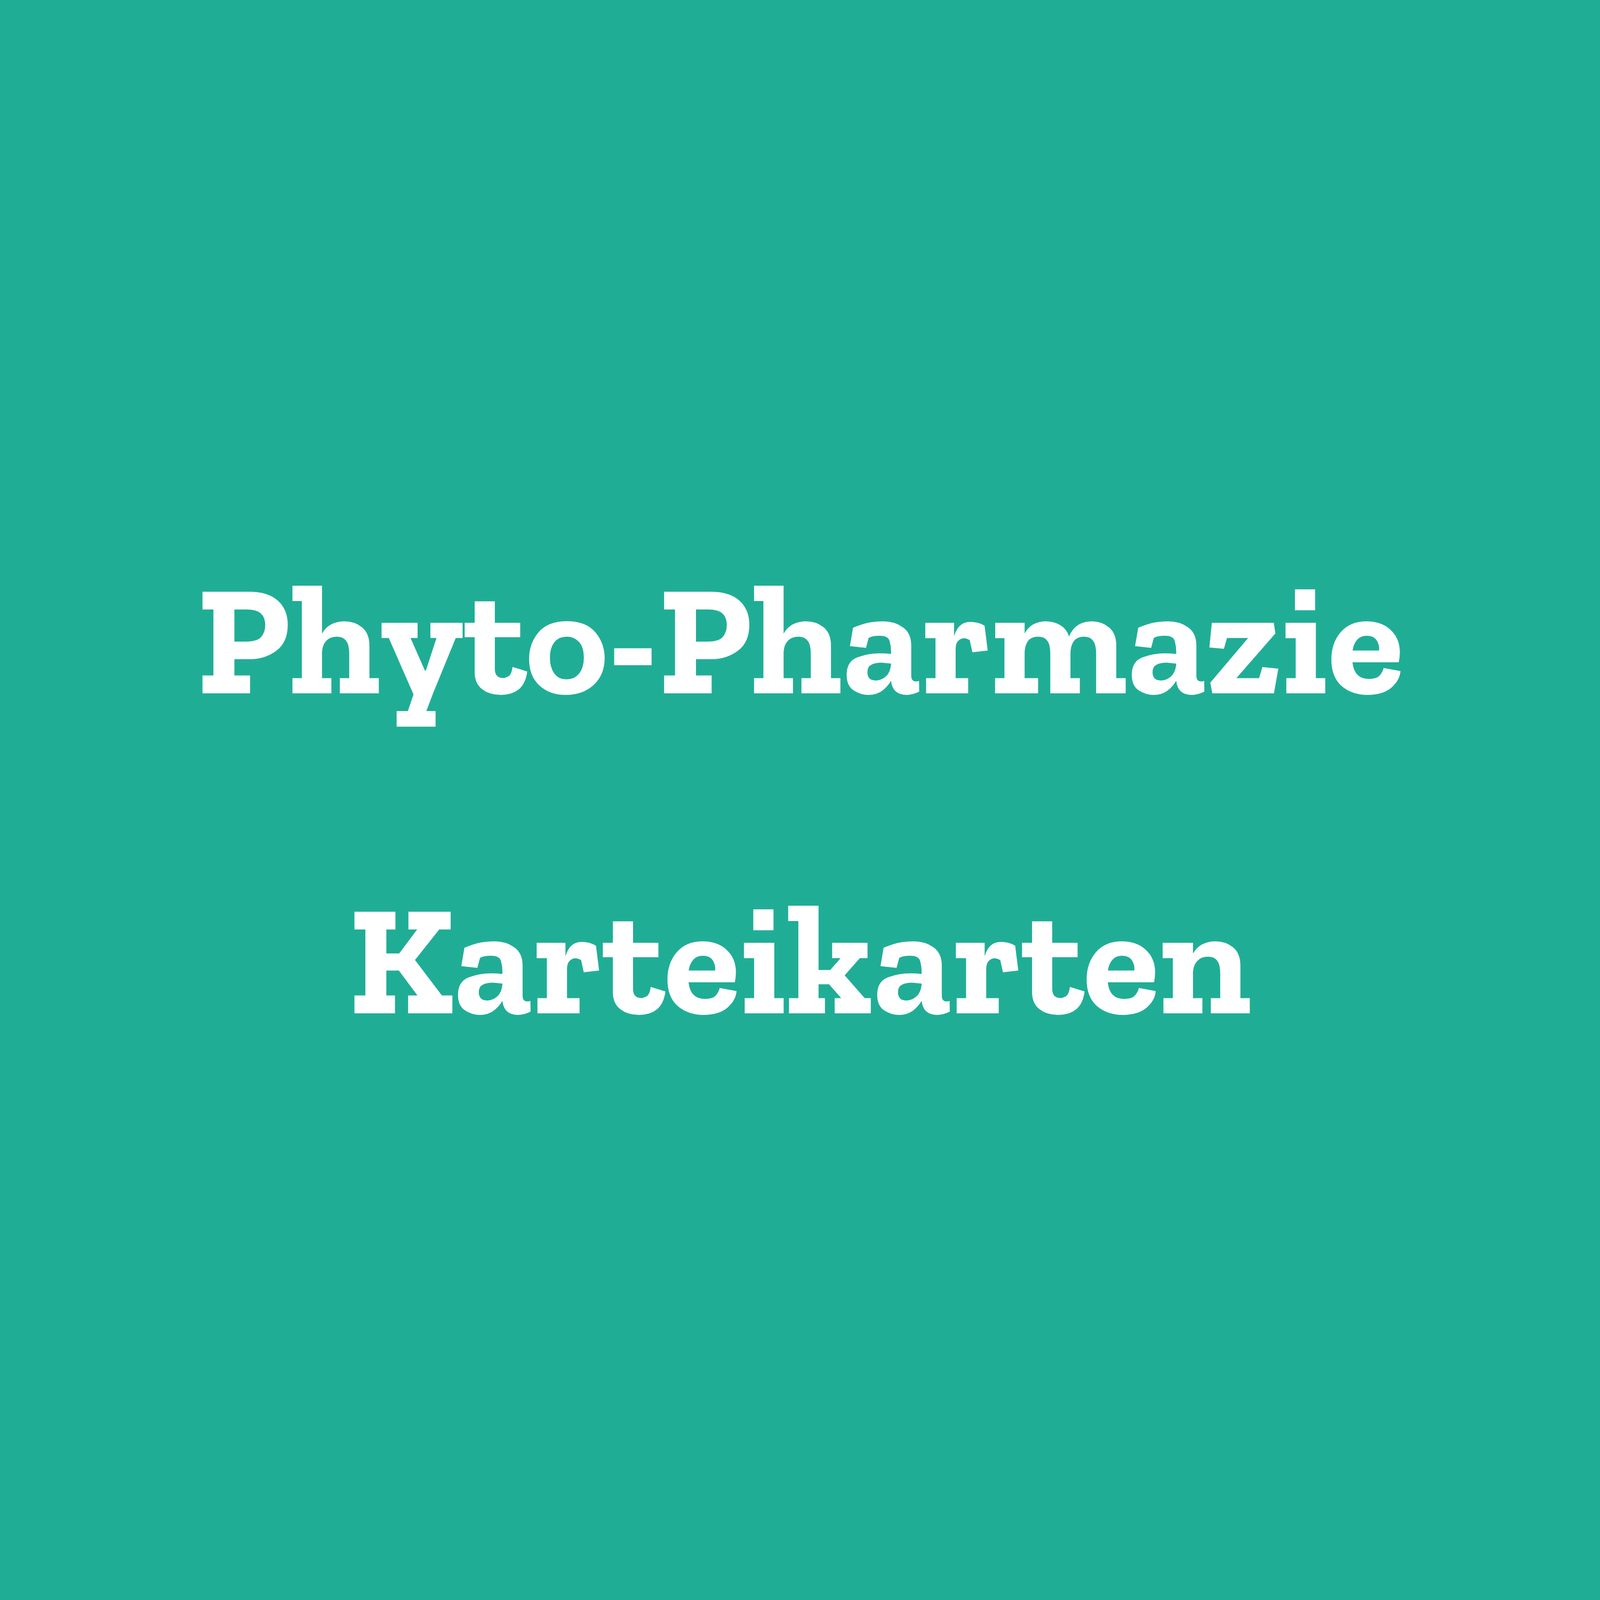 Phyto-Pharmazie Karteikarten